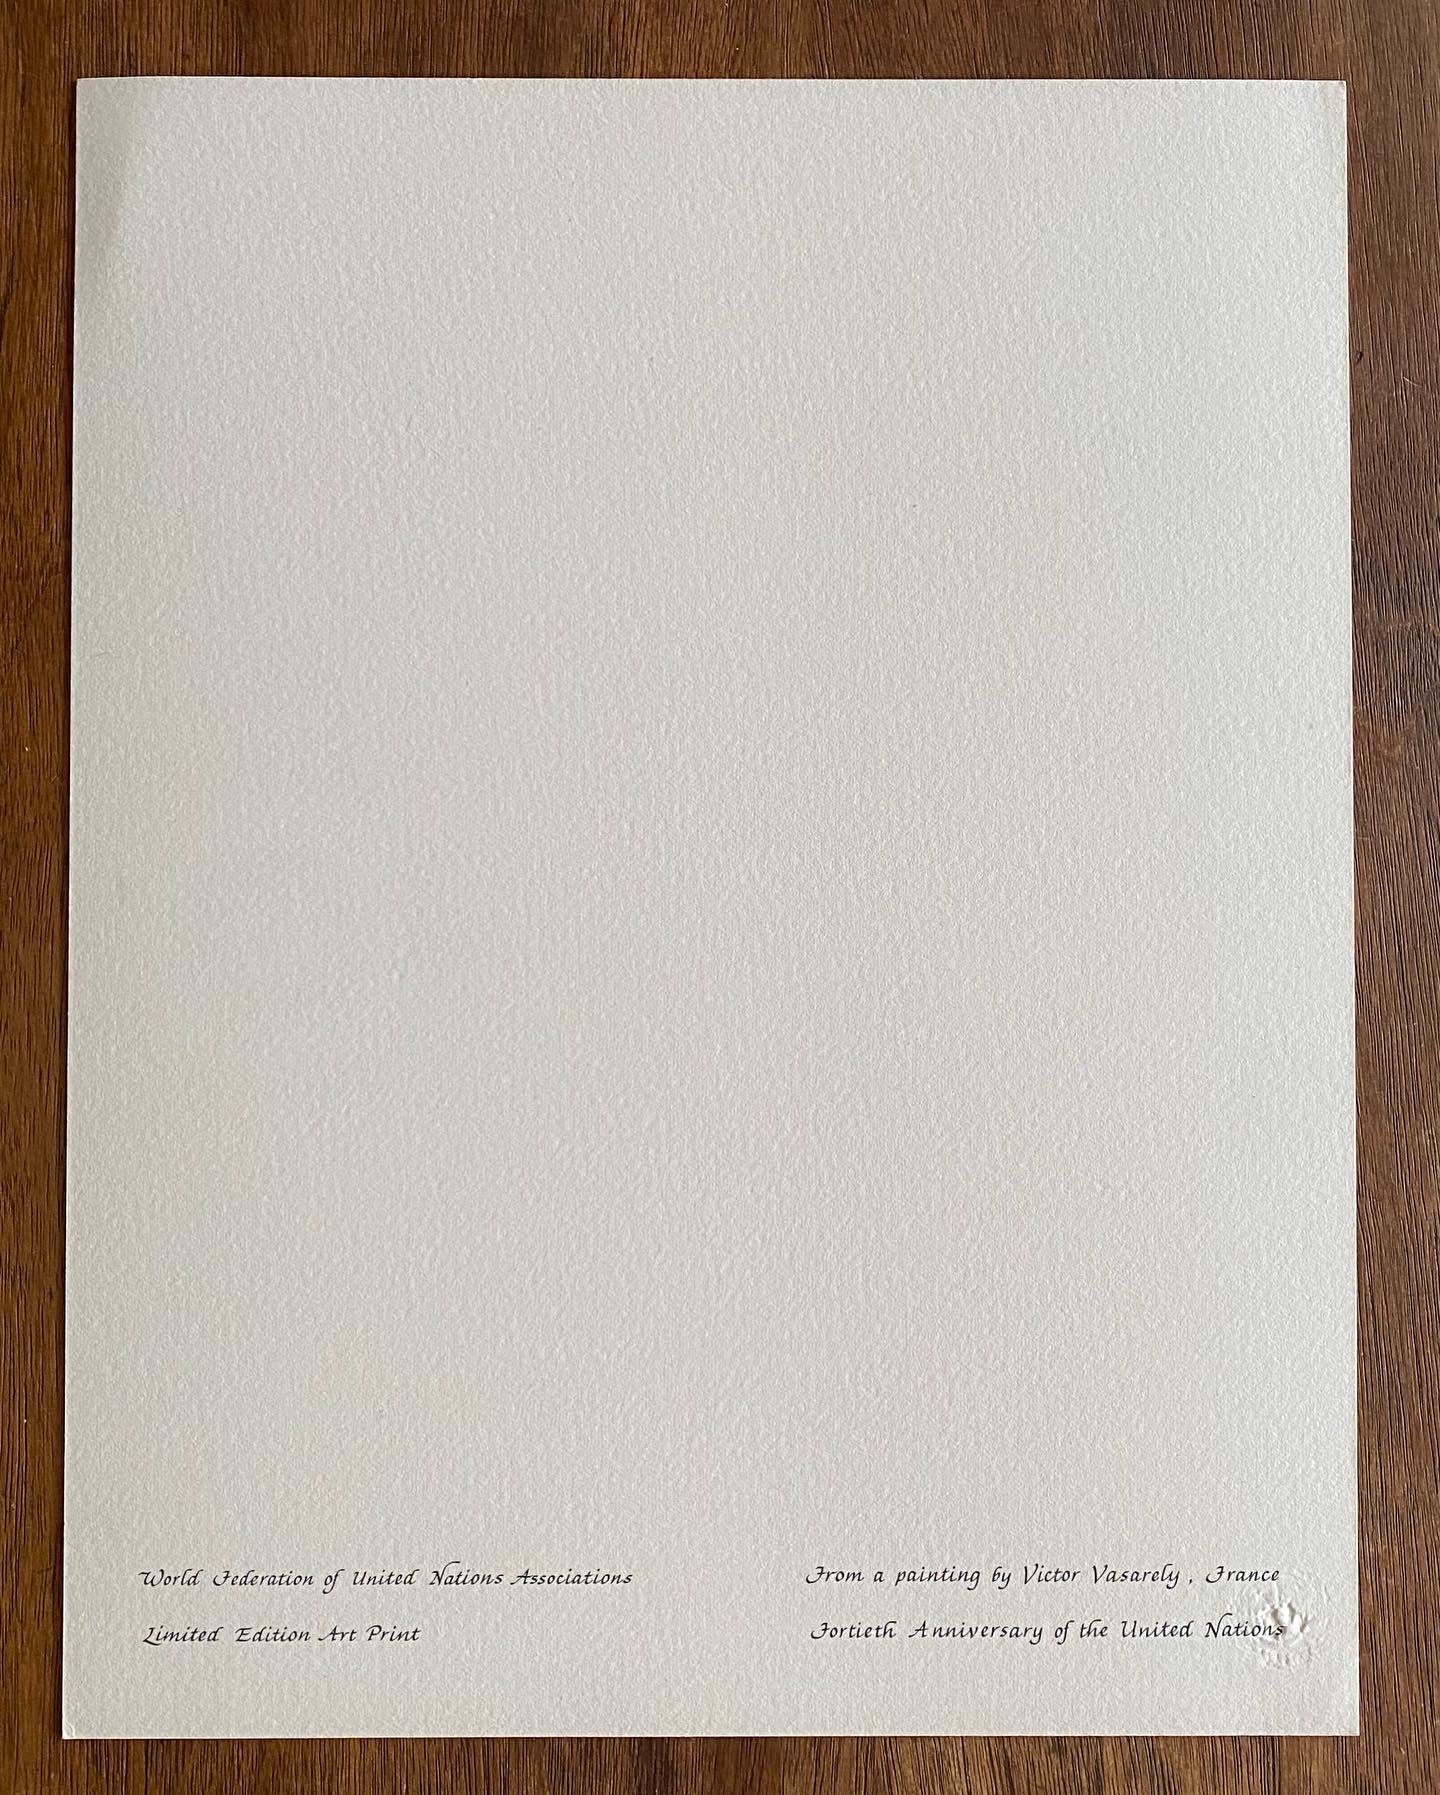 Victor Vasarely  "PLURAL", 1985,